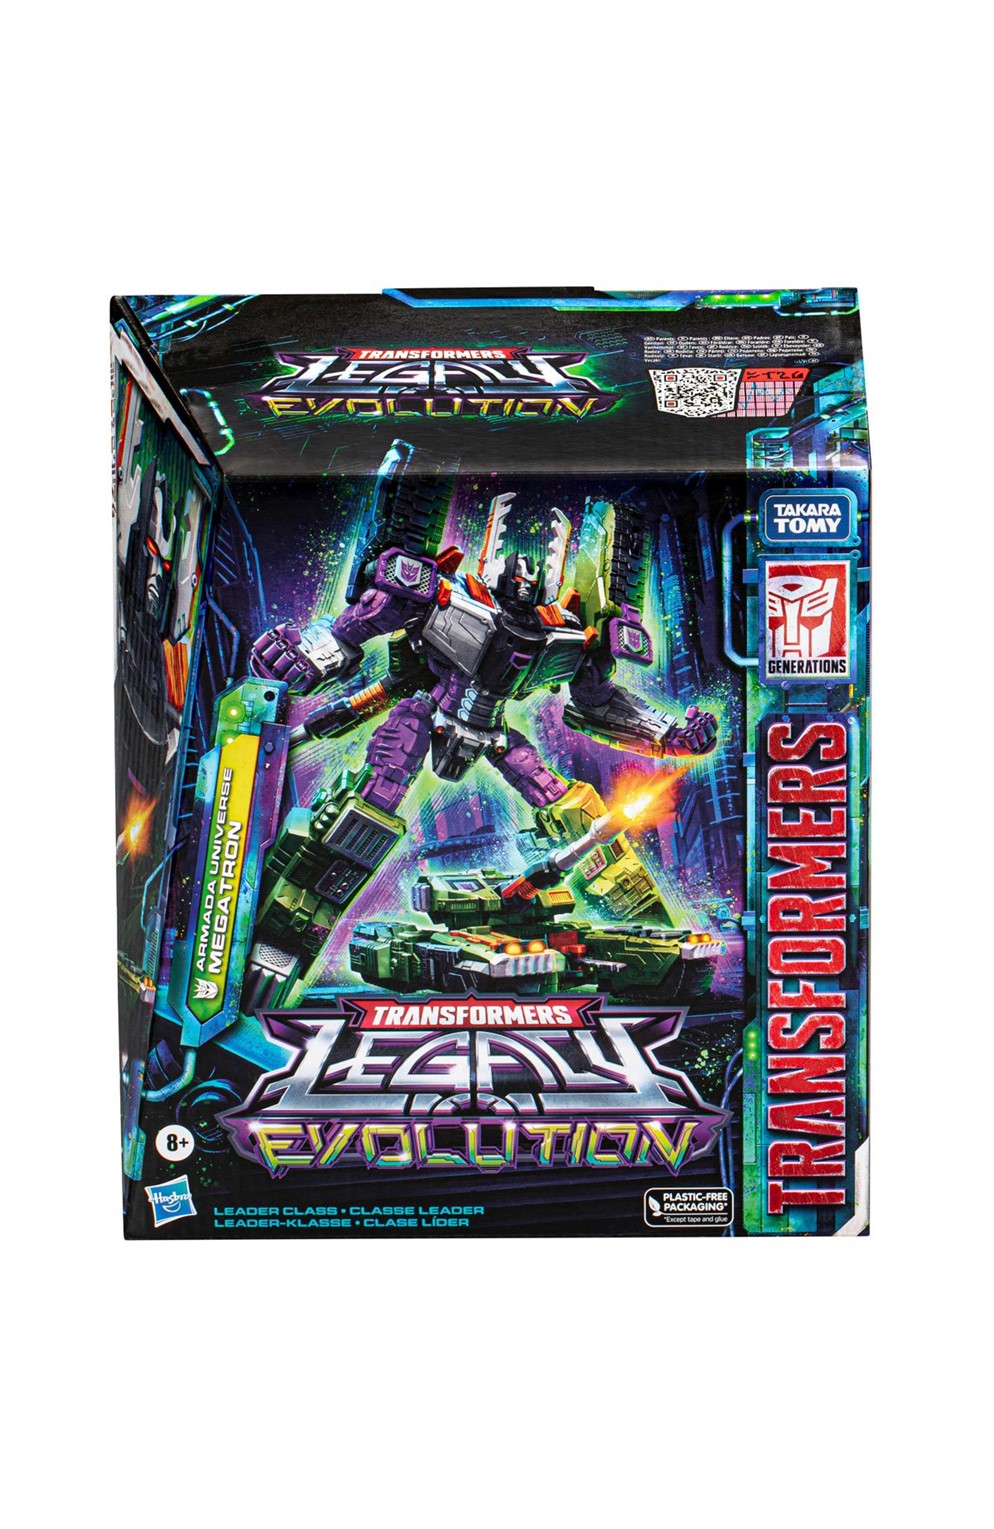 Transformers Generations Legacy Evolution Leader Armada Megatron Action Figure